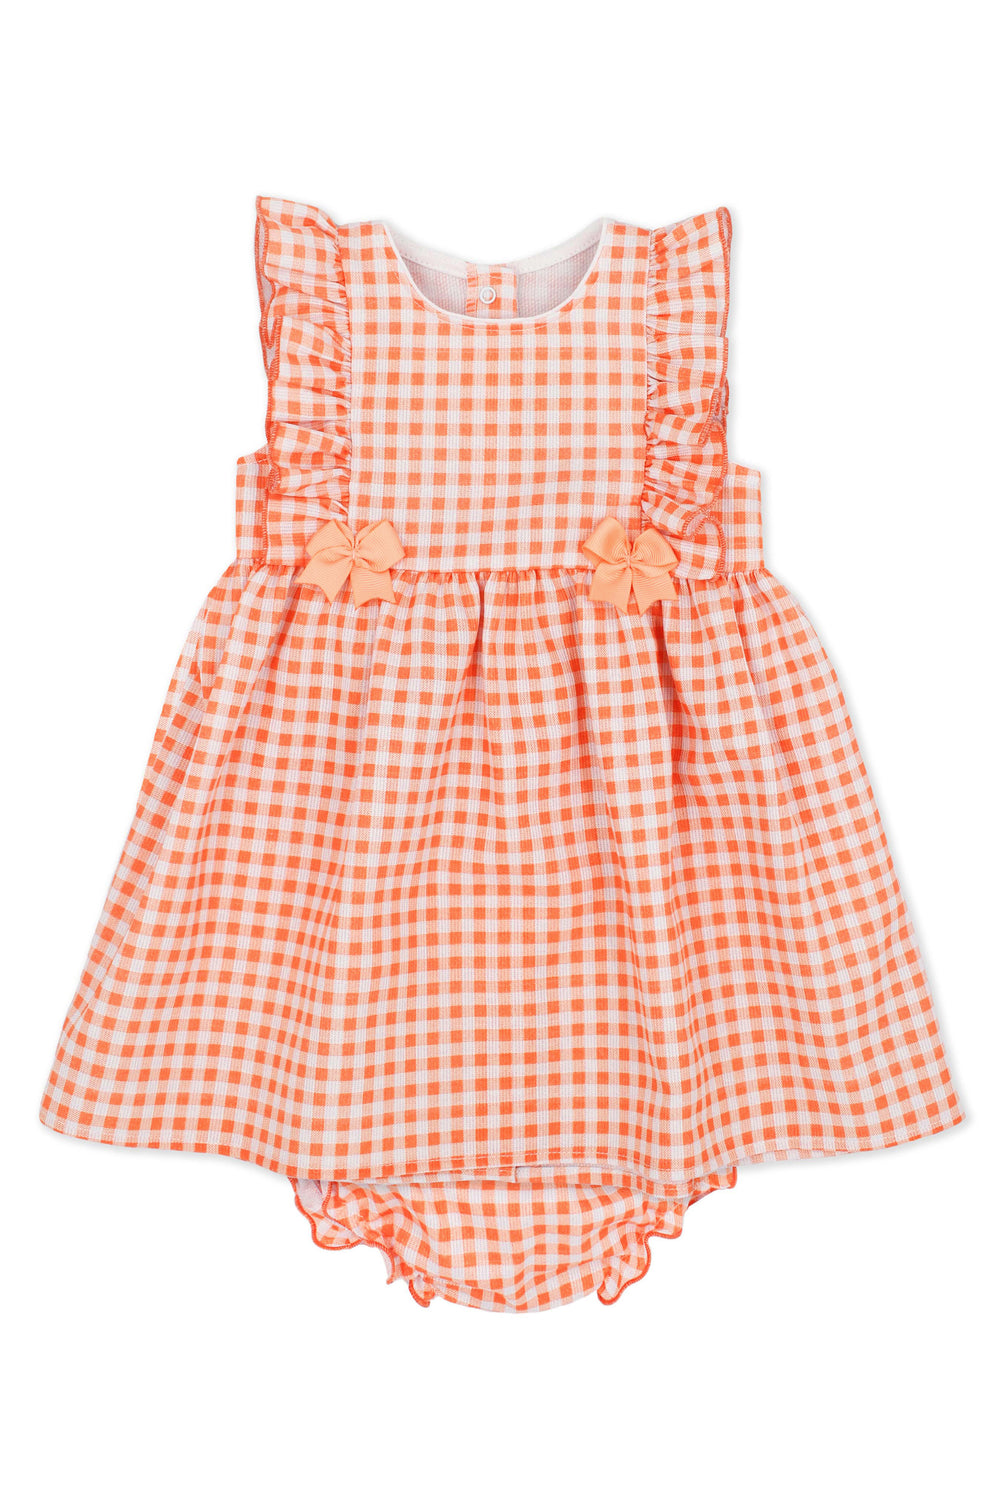 Rapife "Peaches" Orange Gingham Dress & Bloomers | Millie and John